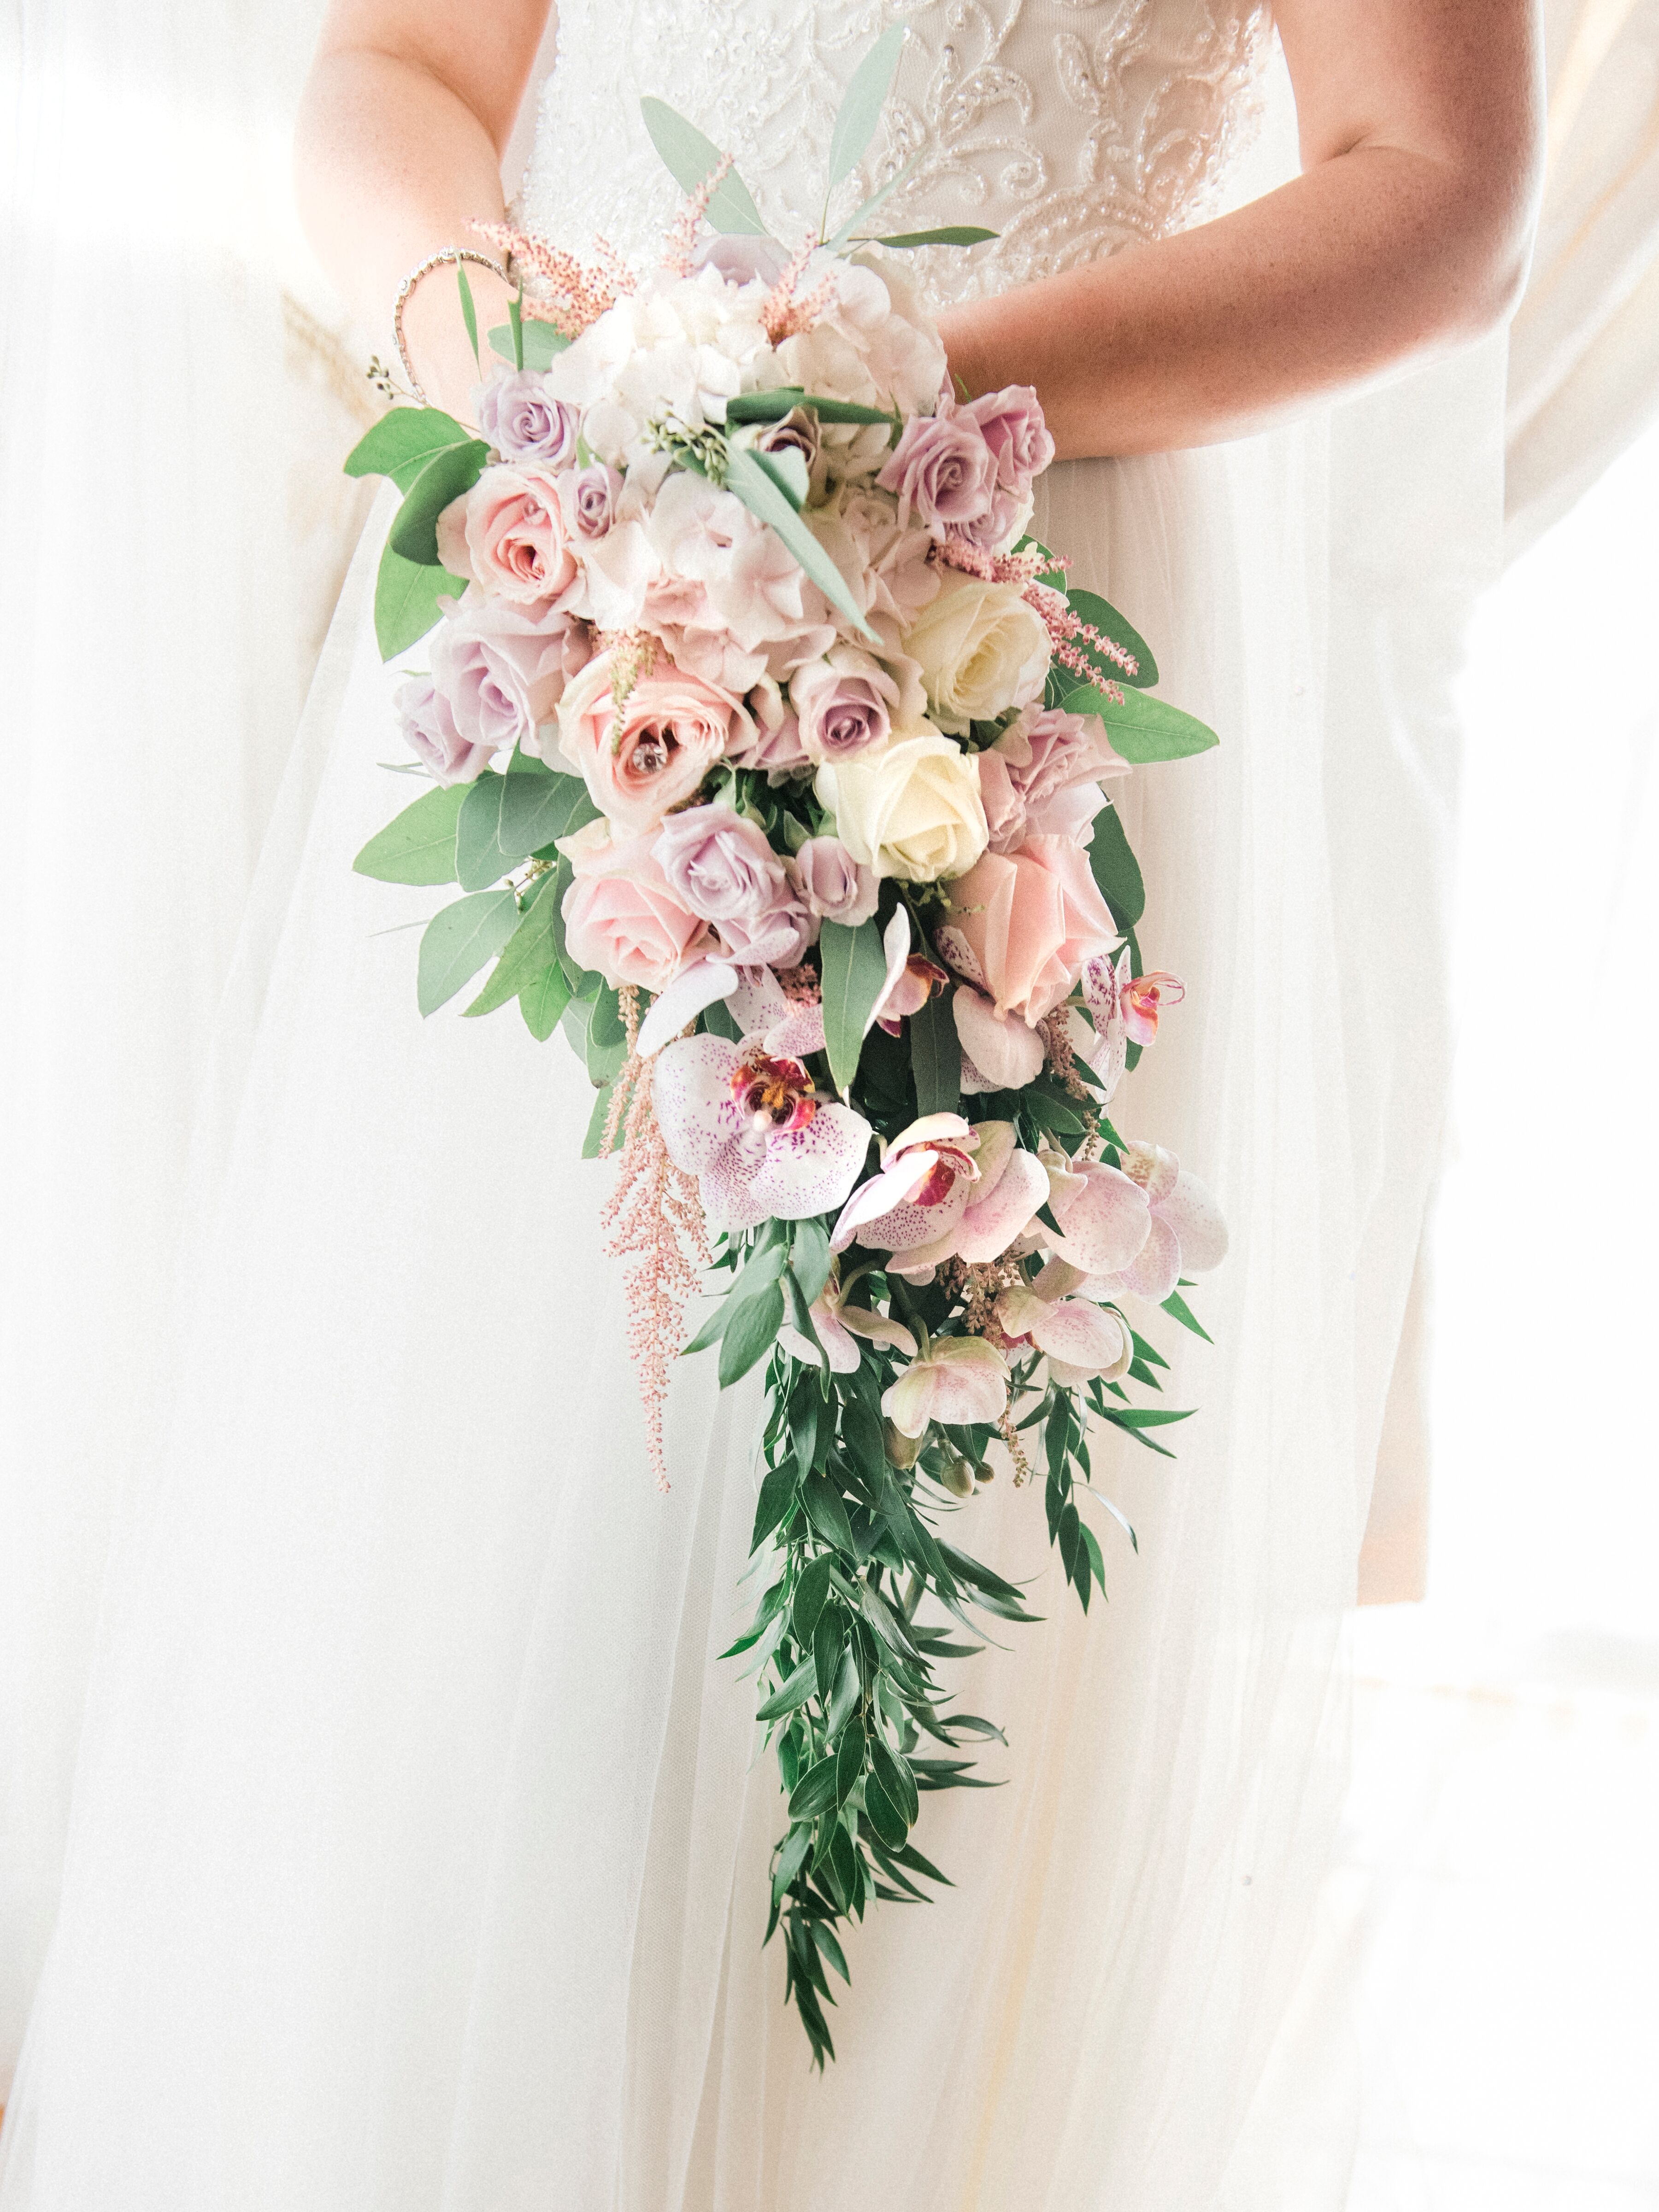 ELY Flowers, Weddings & Events